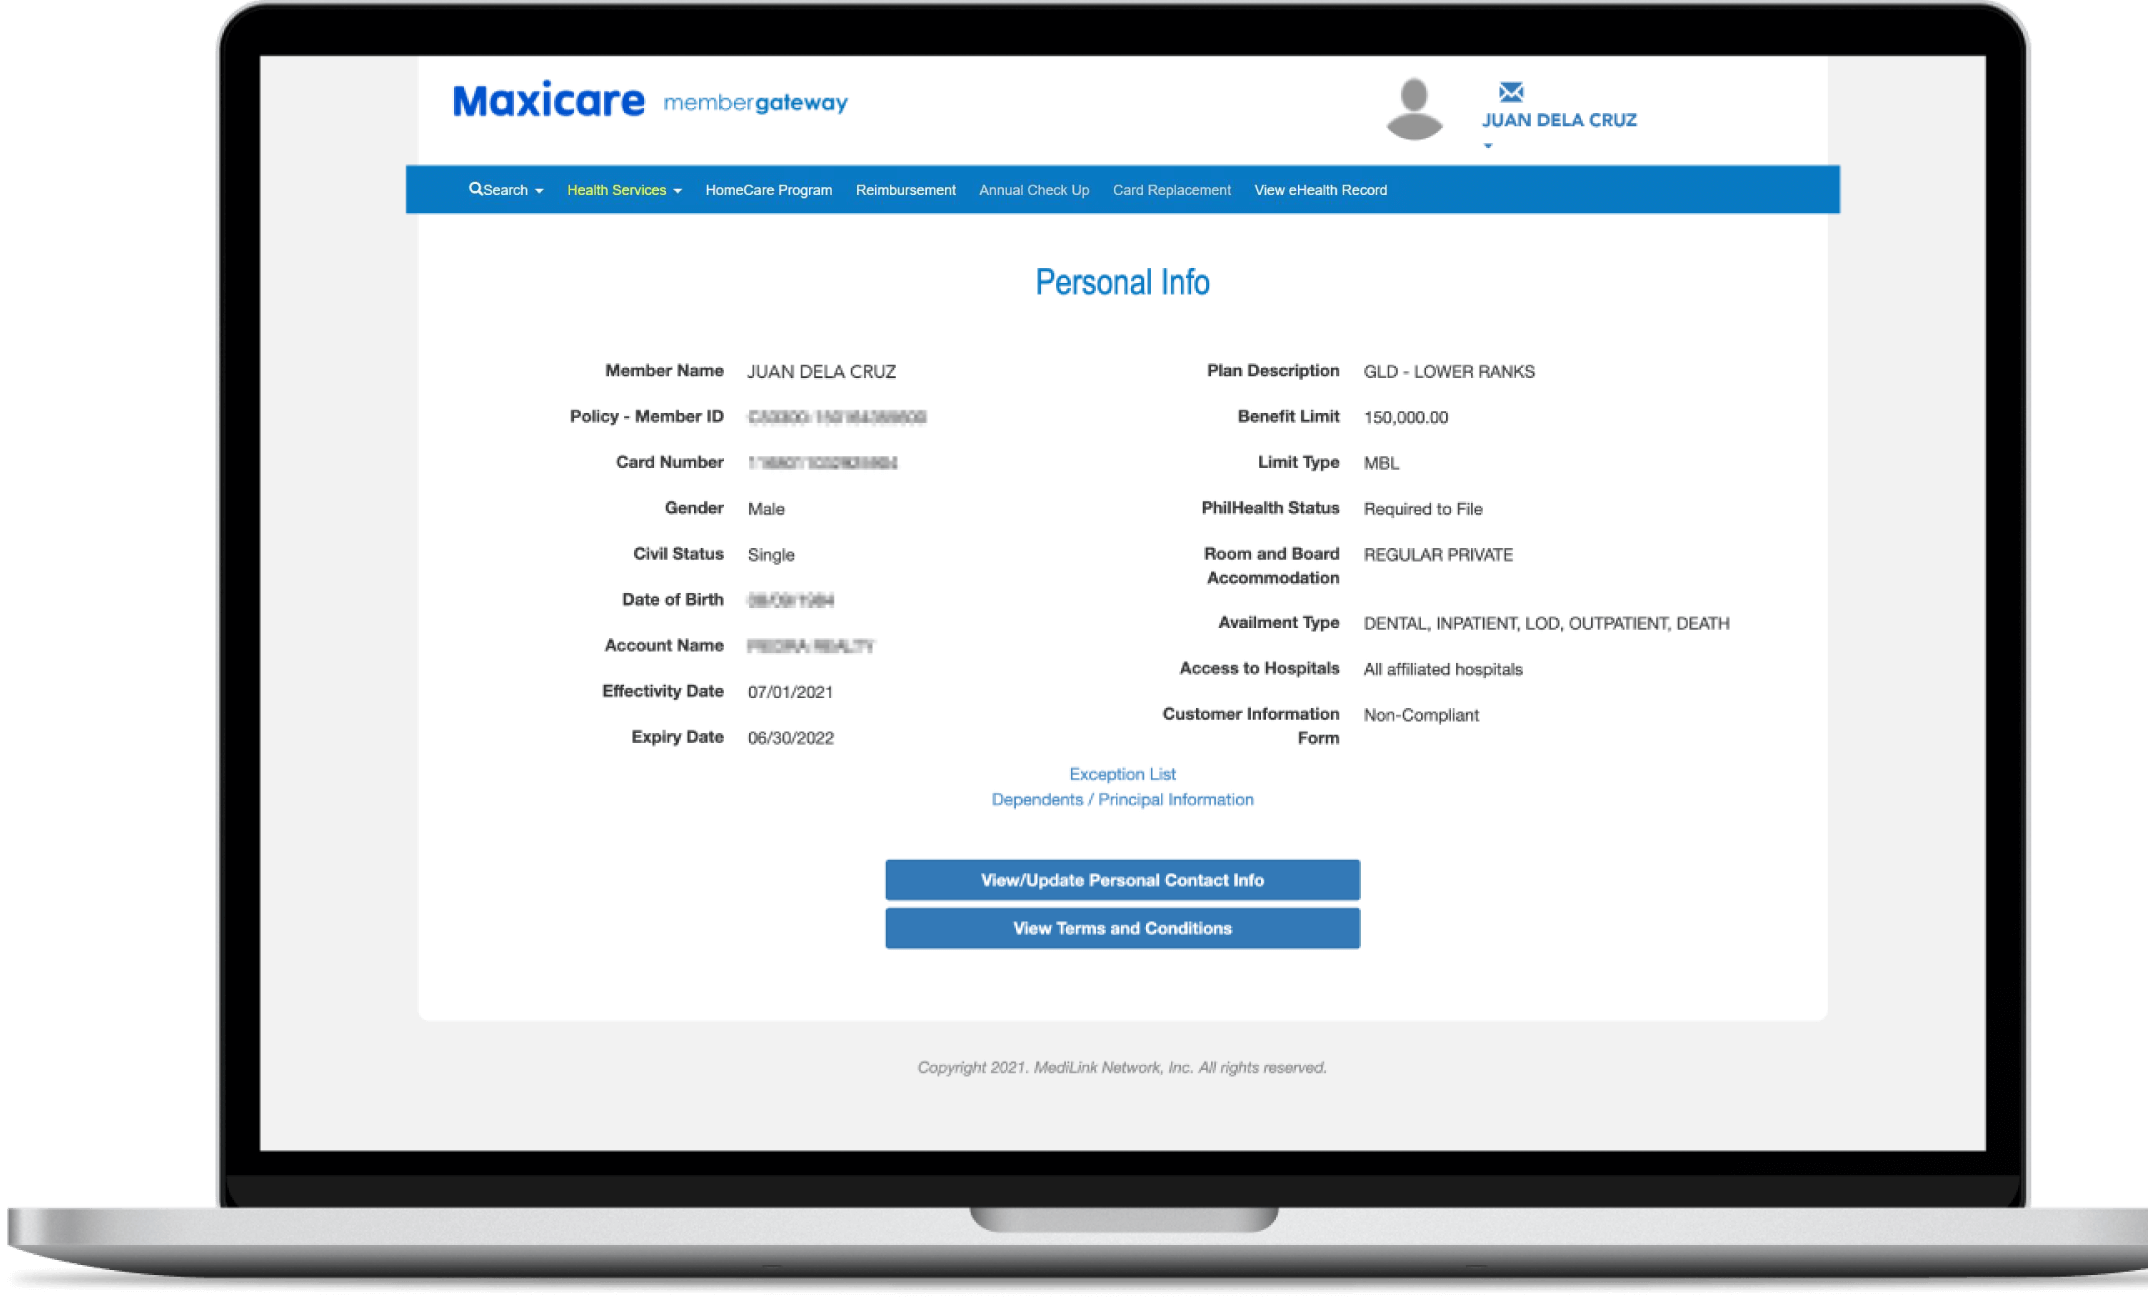 A macbook pro displaying Maxicare member gateway